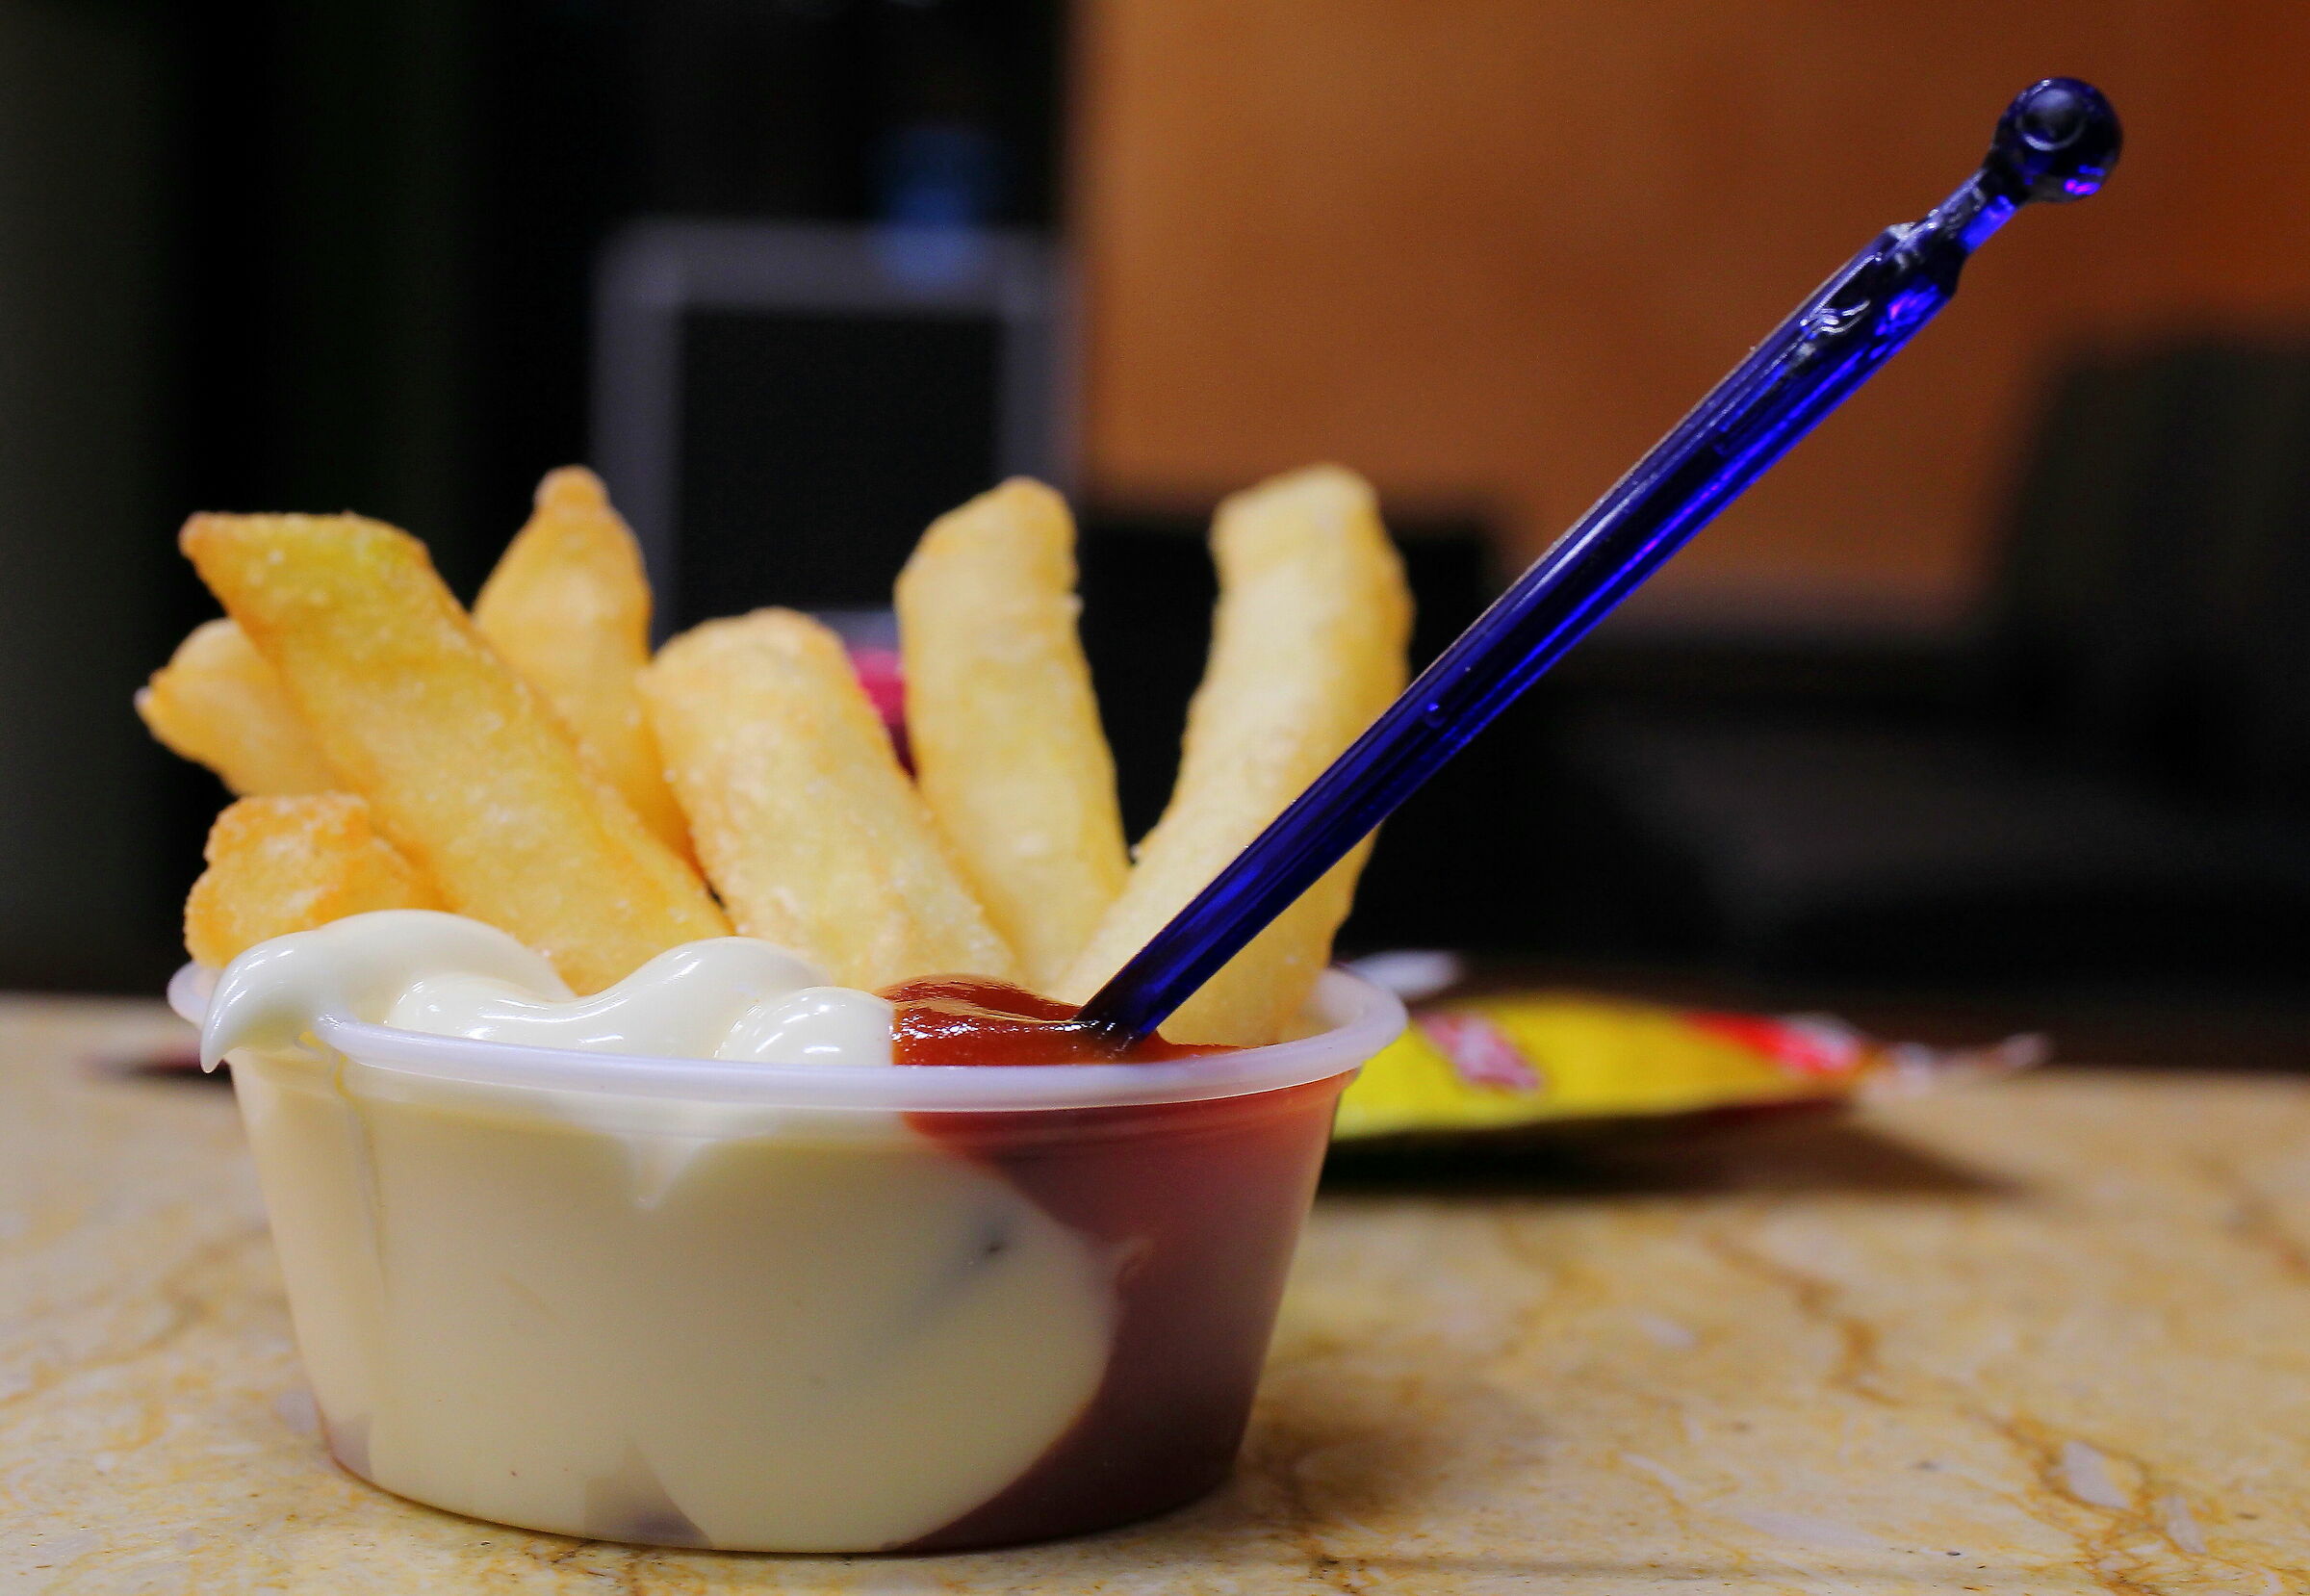 Fries...